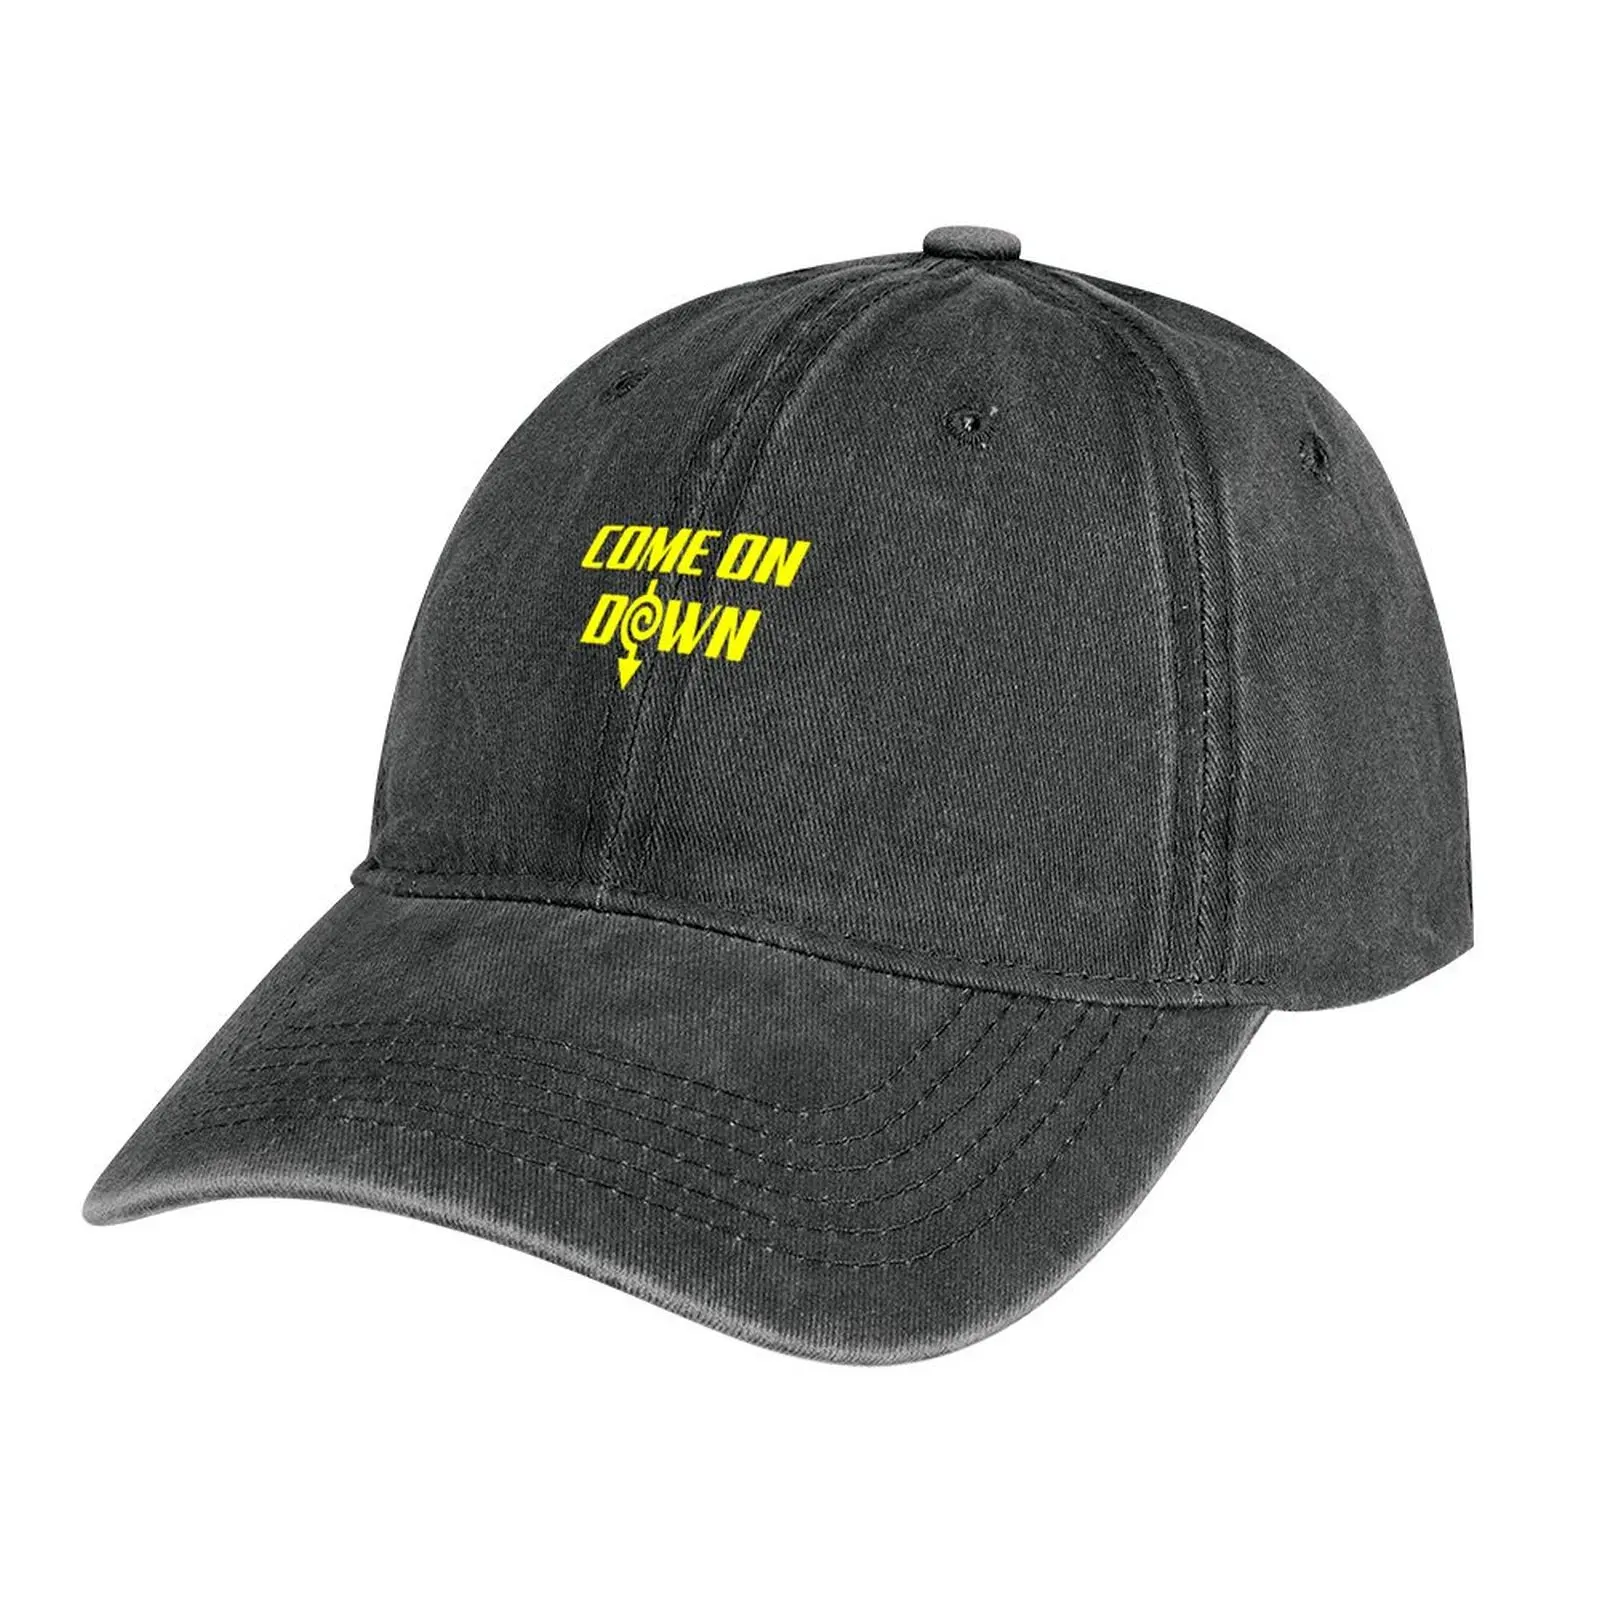 

Лучшая цена, ковбойская шляпа 2019 года, шляпа большого размера, Солнцезащитная Западная шляпа, Bobble, мужская, женская, для тенниса